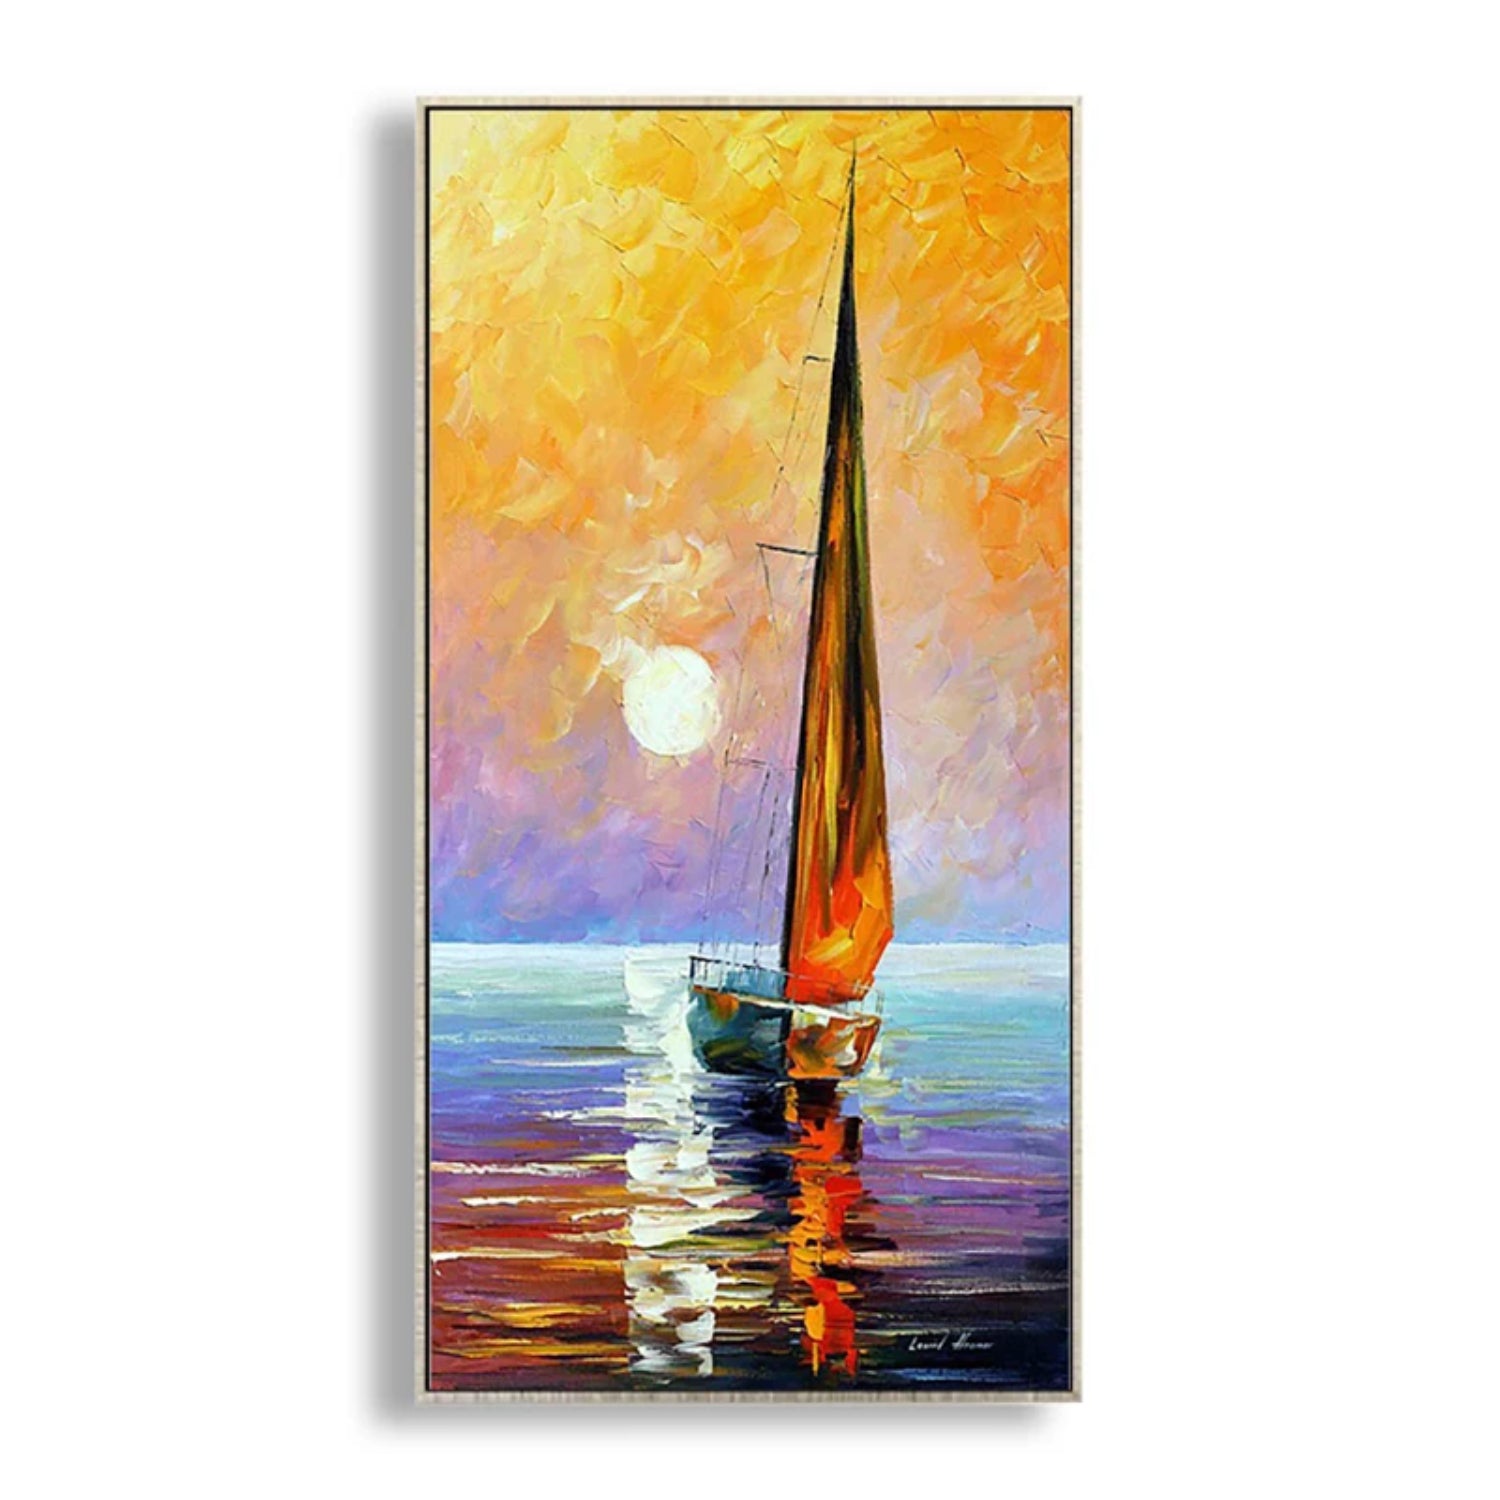 Vibrant Sailboat Sunset Seascape Impression Wall Painting